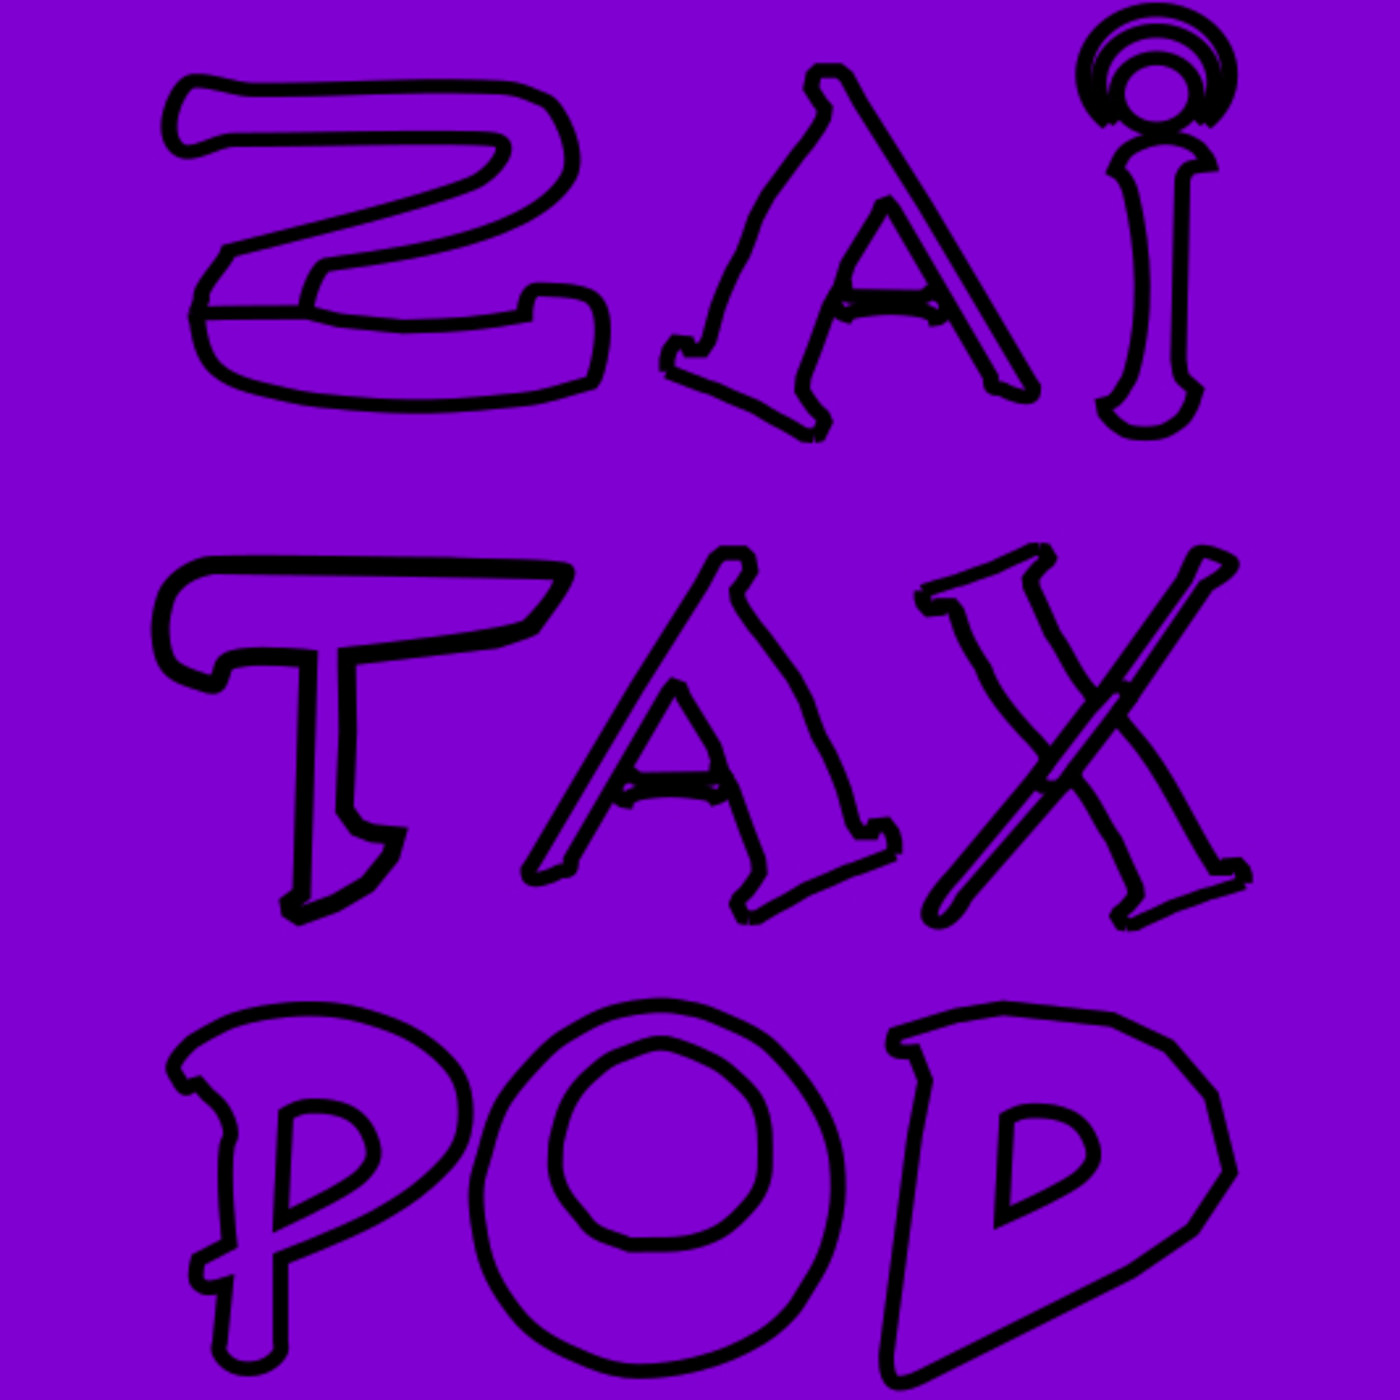 ZaiTax Podcast